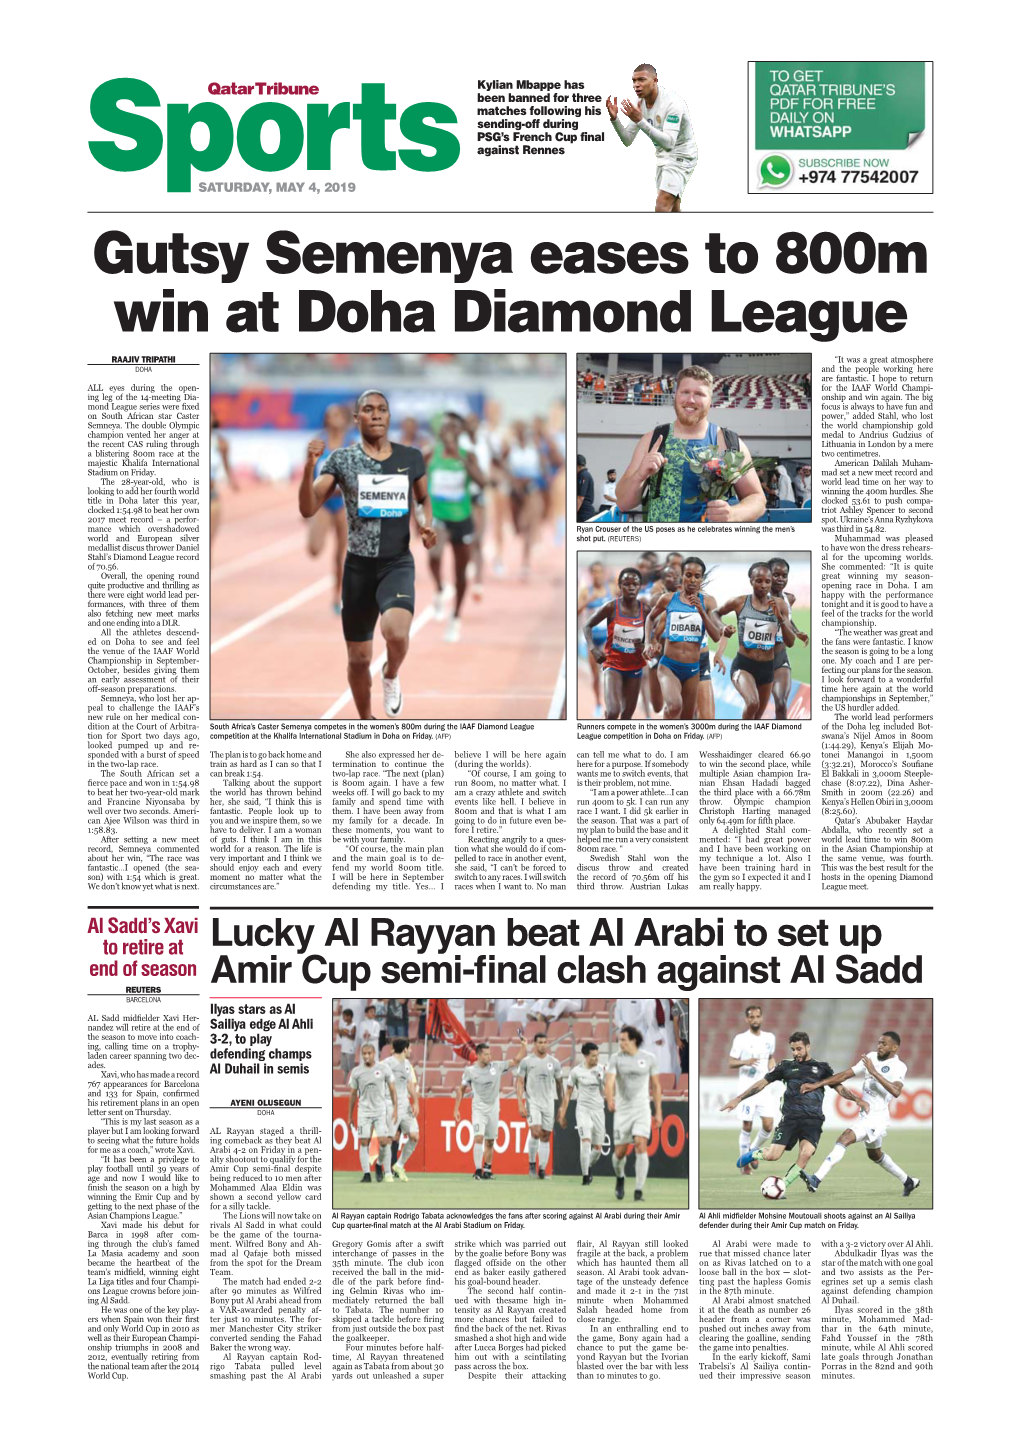 Gutsy Semenya Eases to 800M Win at Doha Diamond League